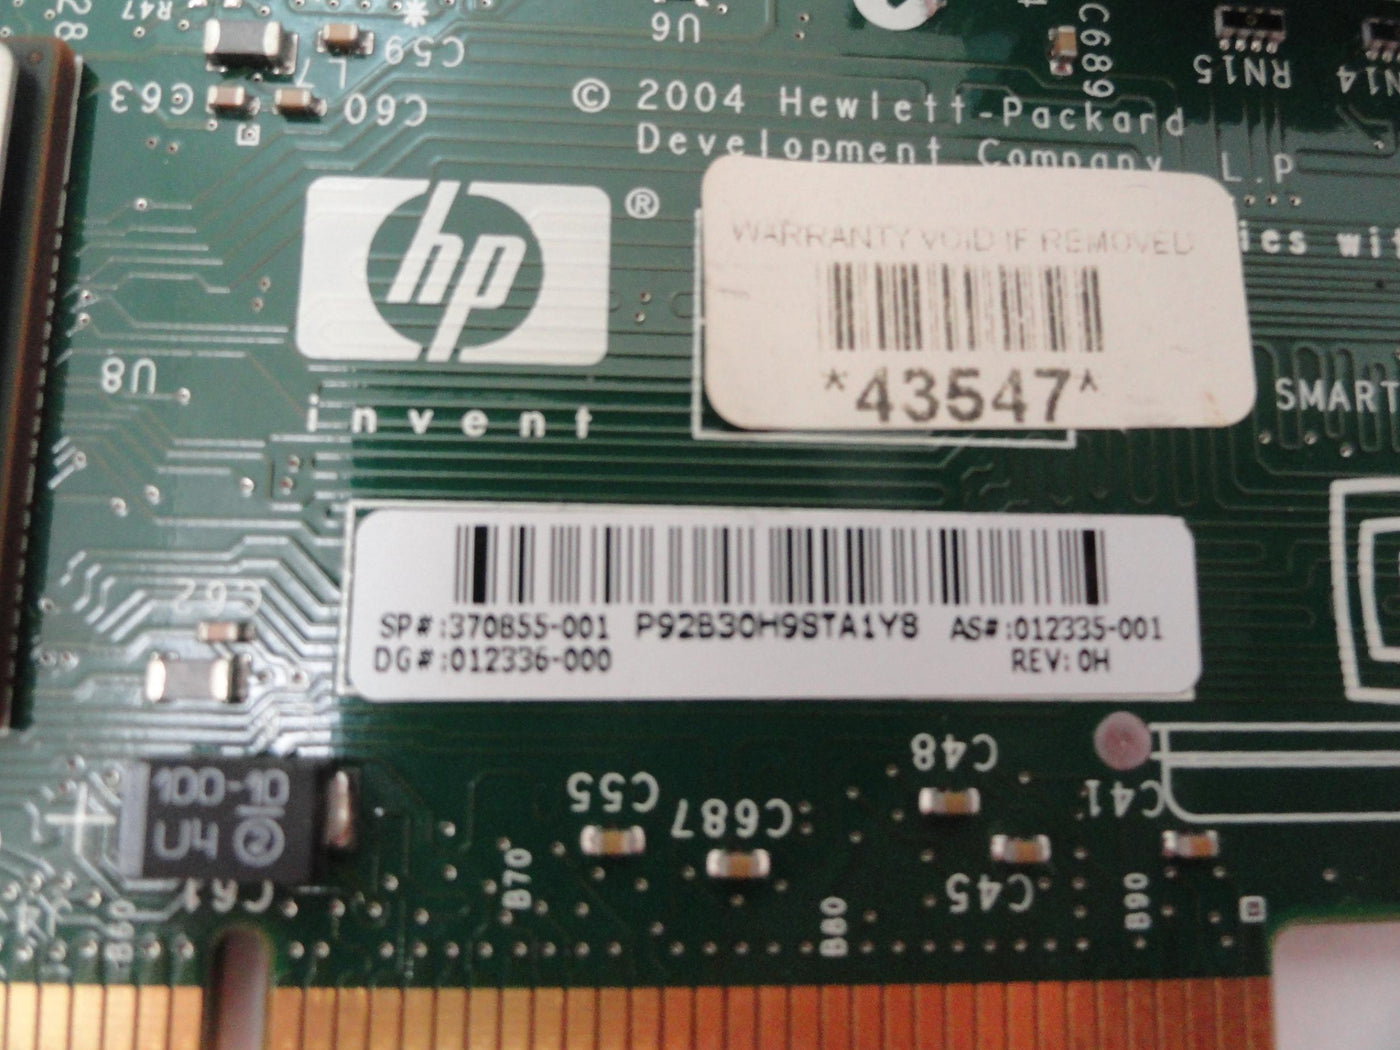 012335-001 - HP PCI-X P600 Smart Array SAS SCSI Raid Controller - Refurbished